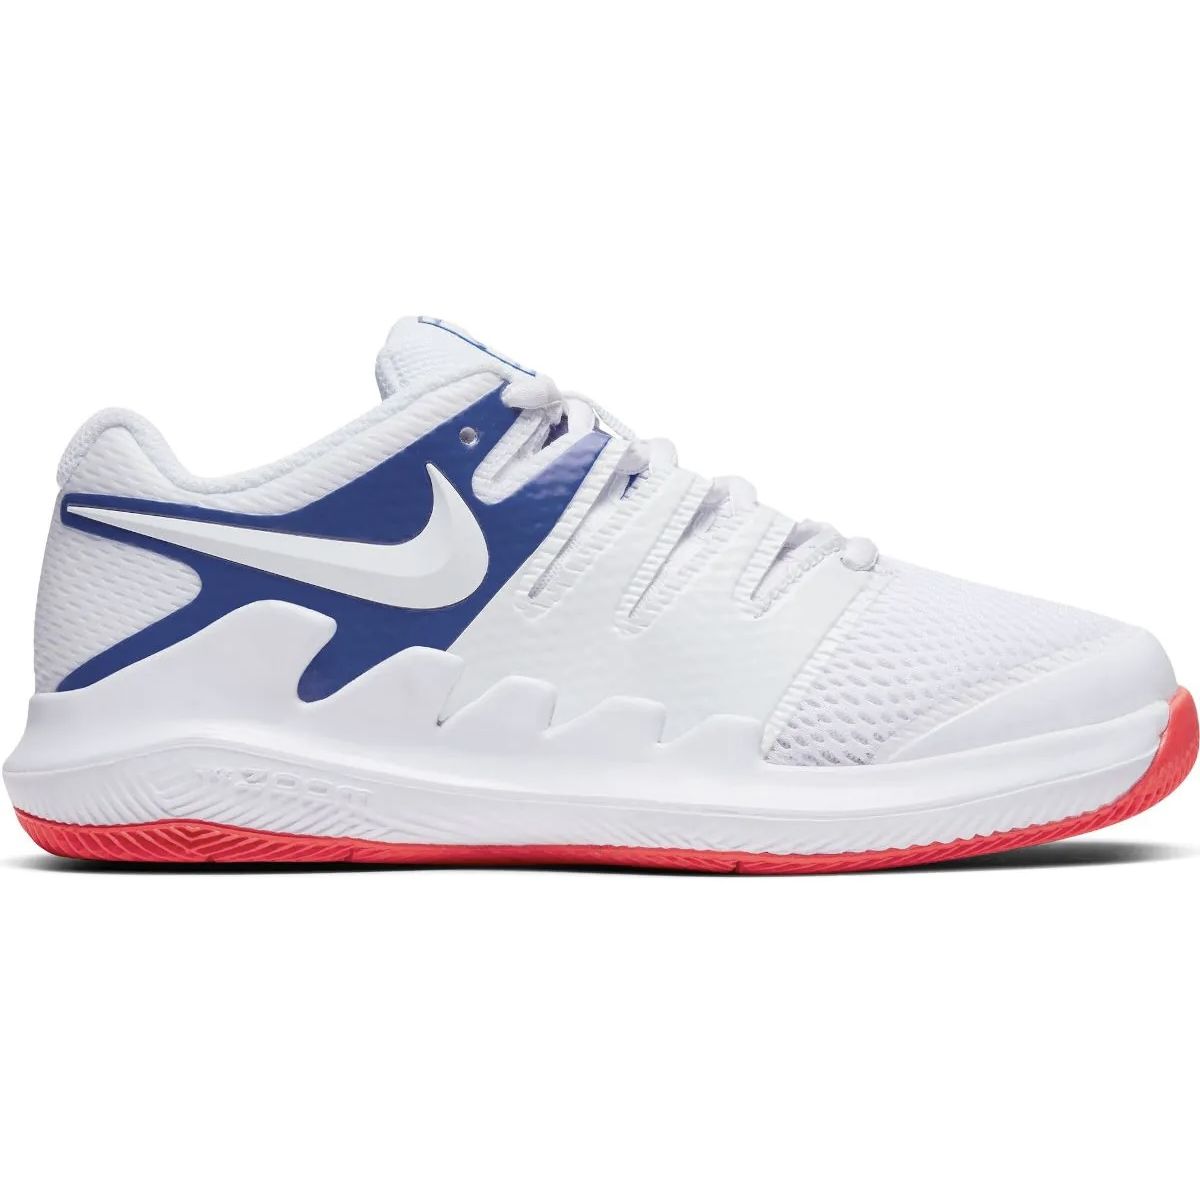 NikeCourt Vapor X Junior Tennis Shoes AR8851-103